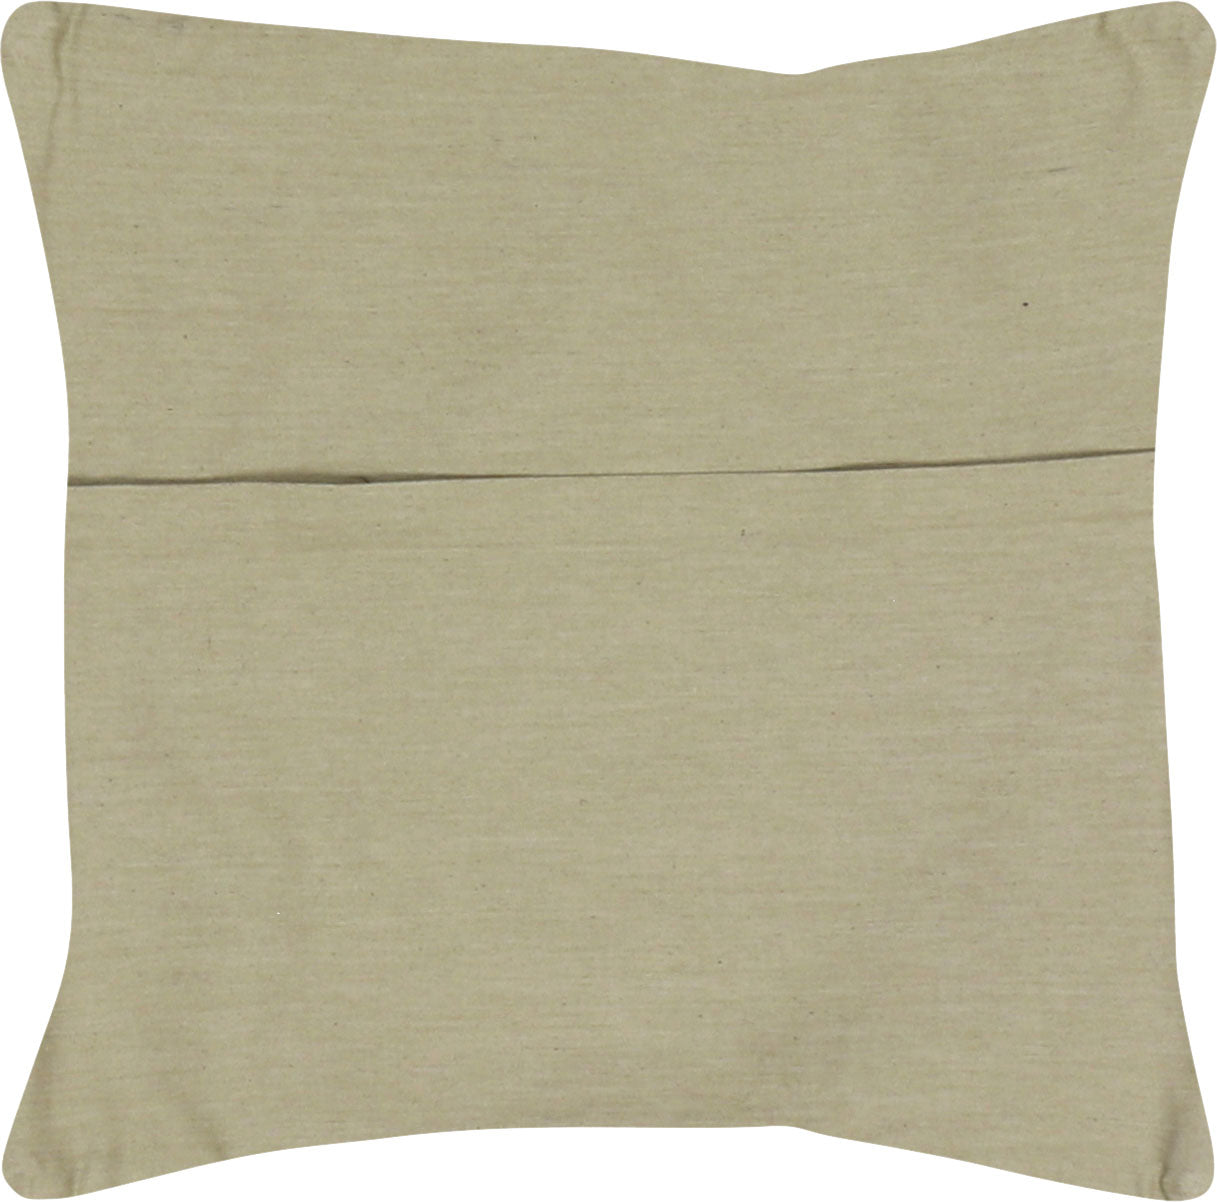 Vintage Turkish Rag Pillow - 16" x 16"